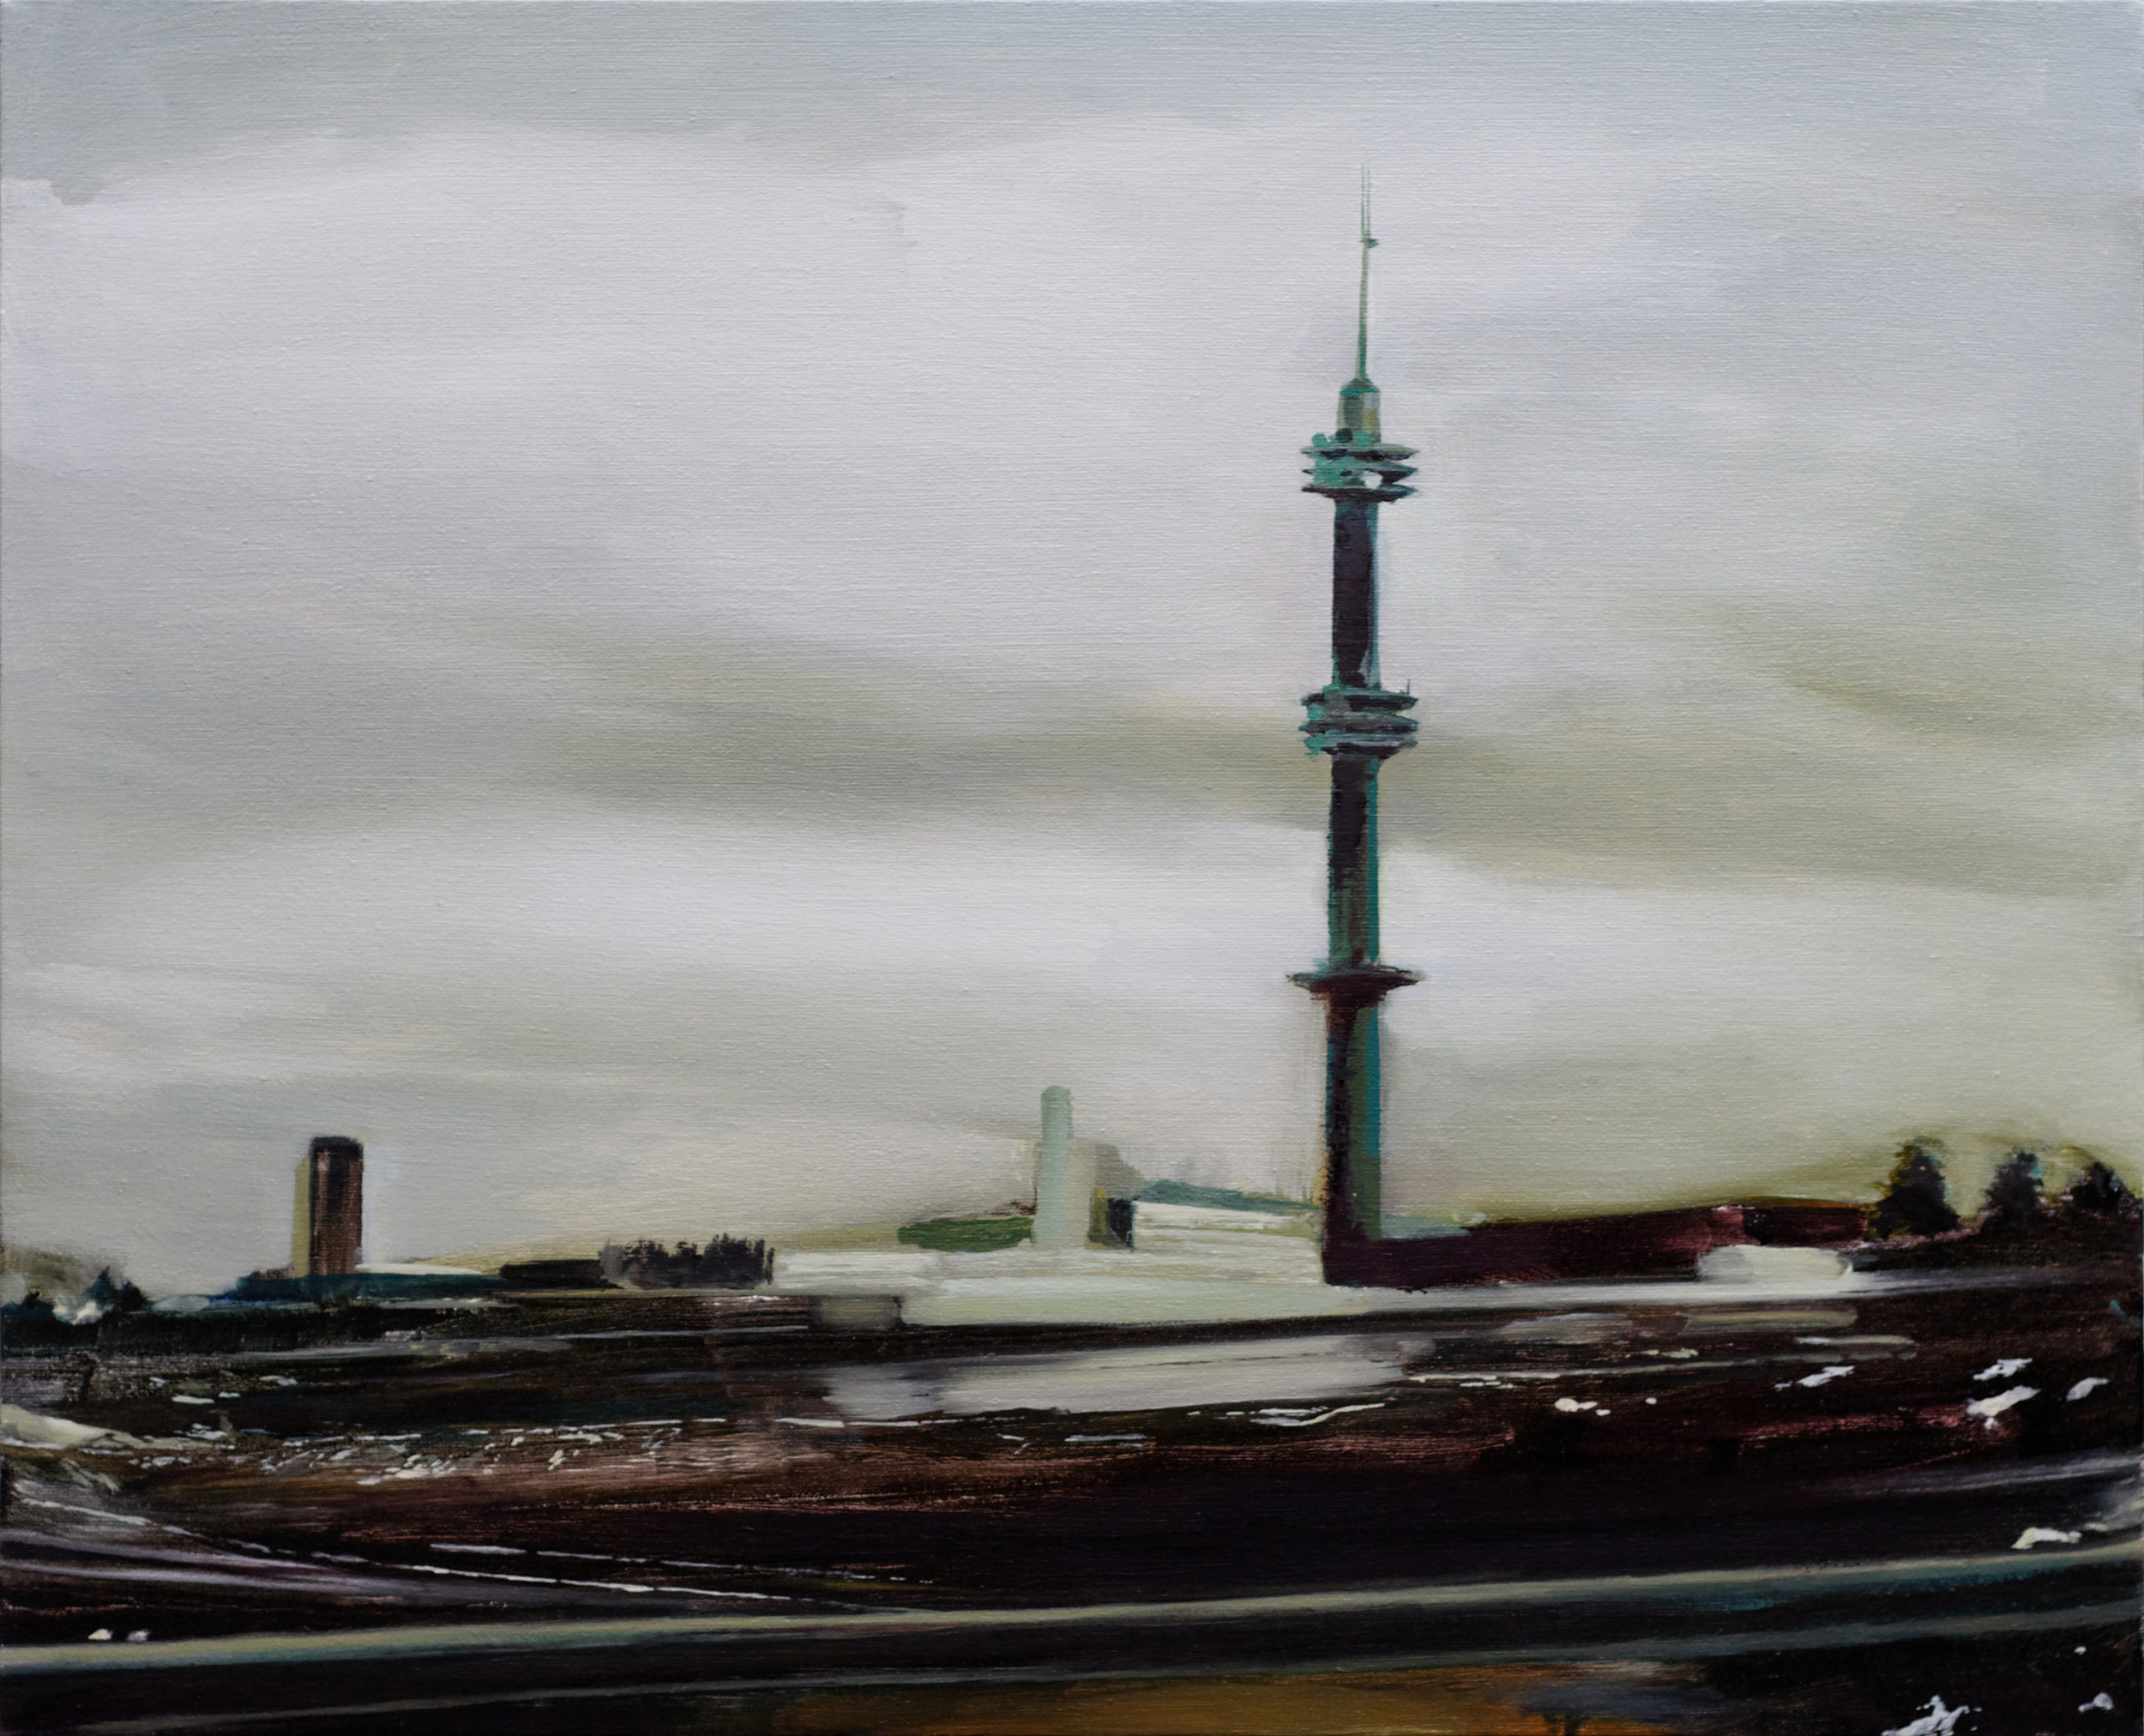   helsinki tower   26" x 21"  oil on canvas  2008    